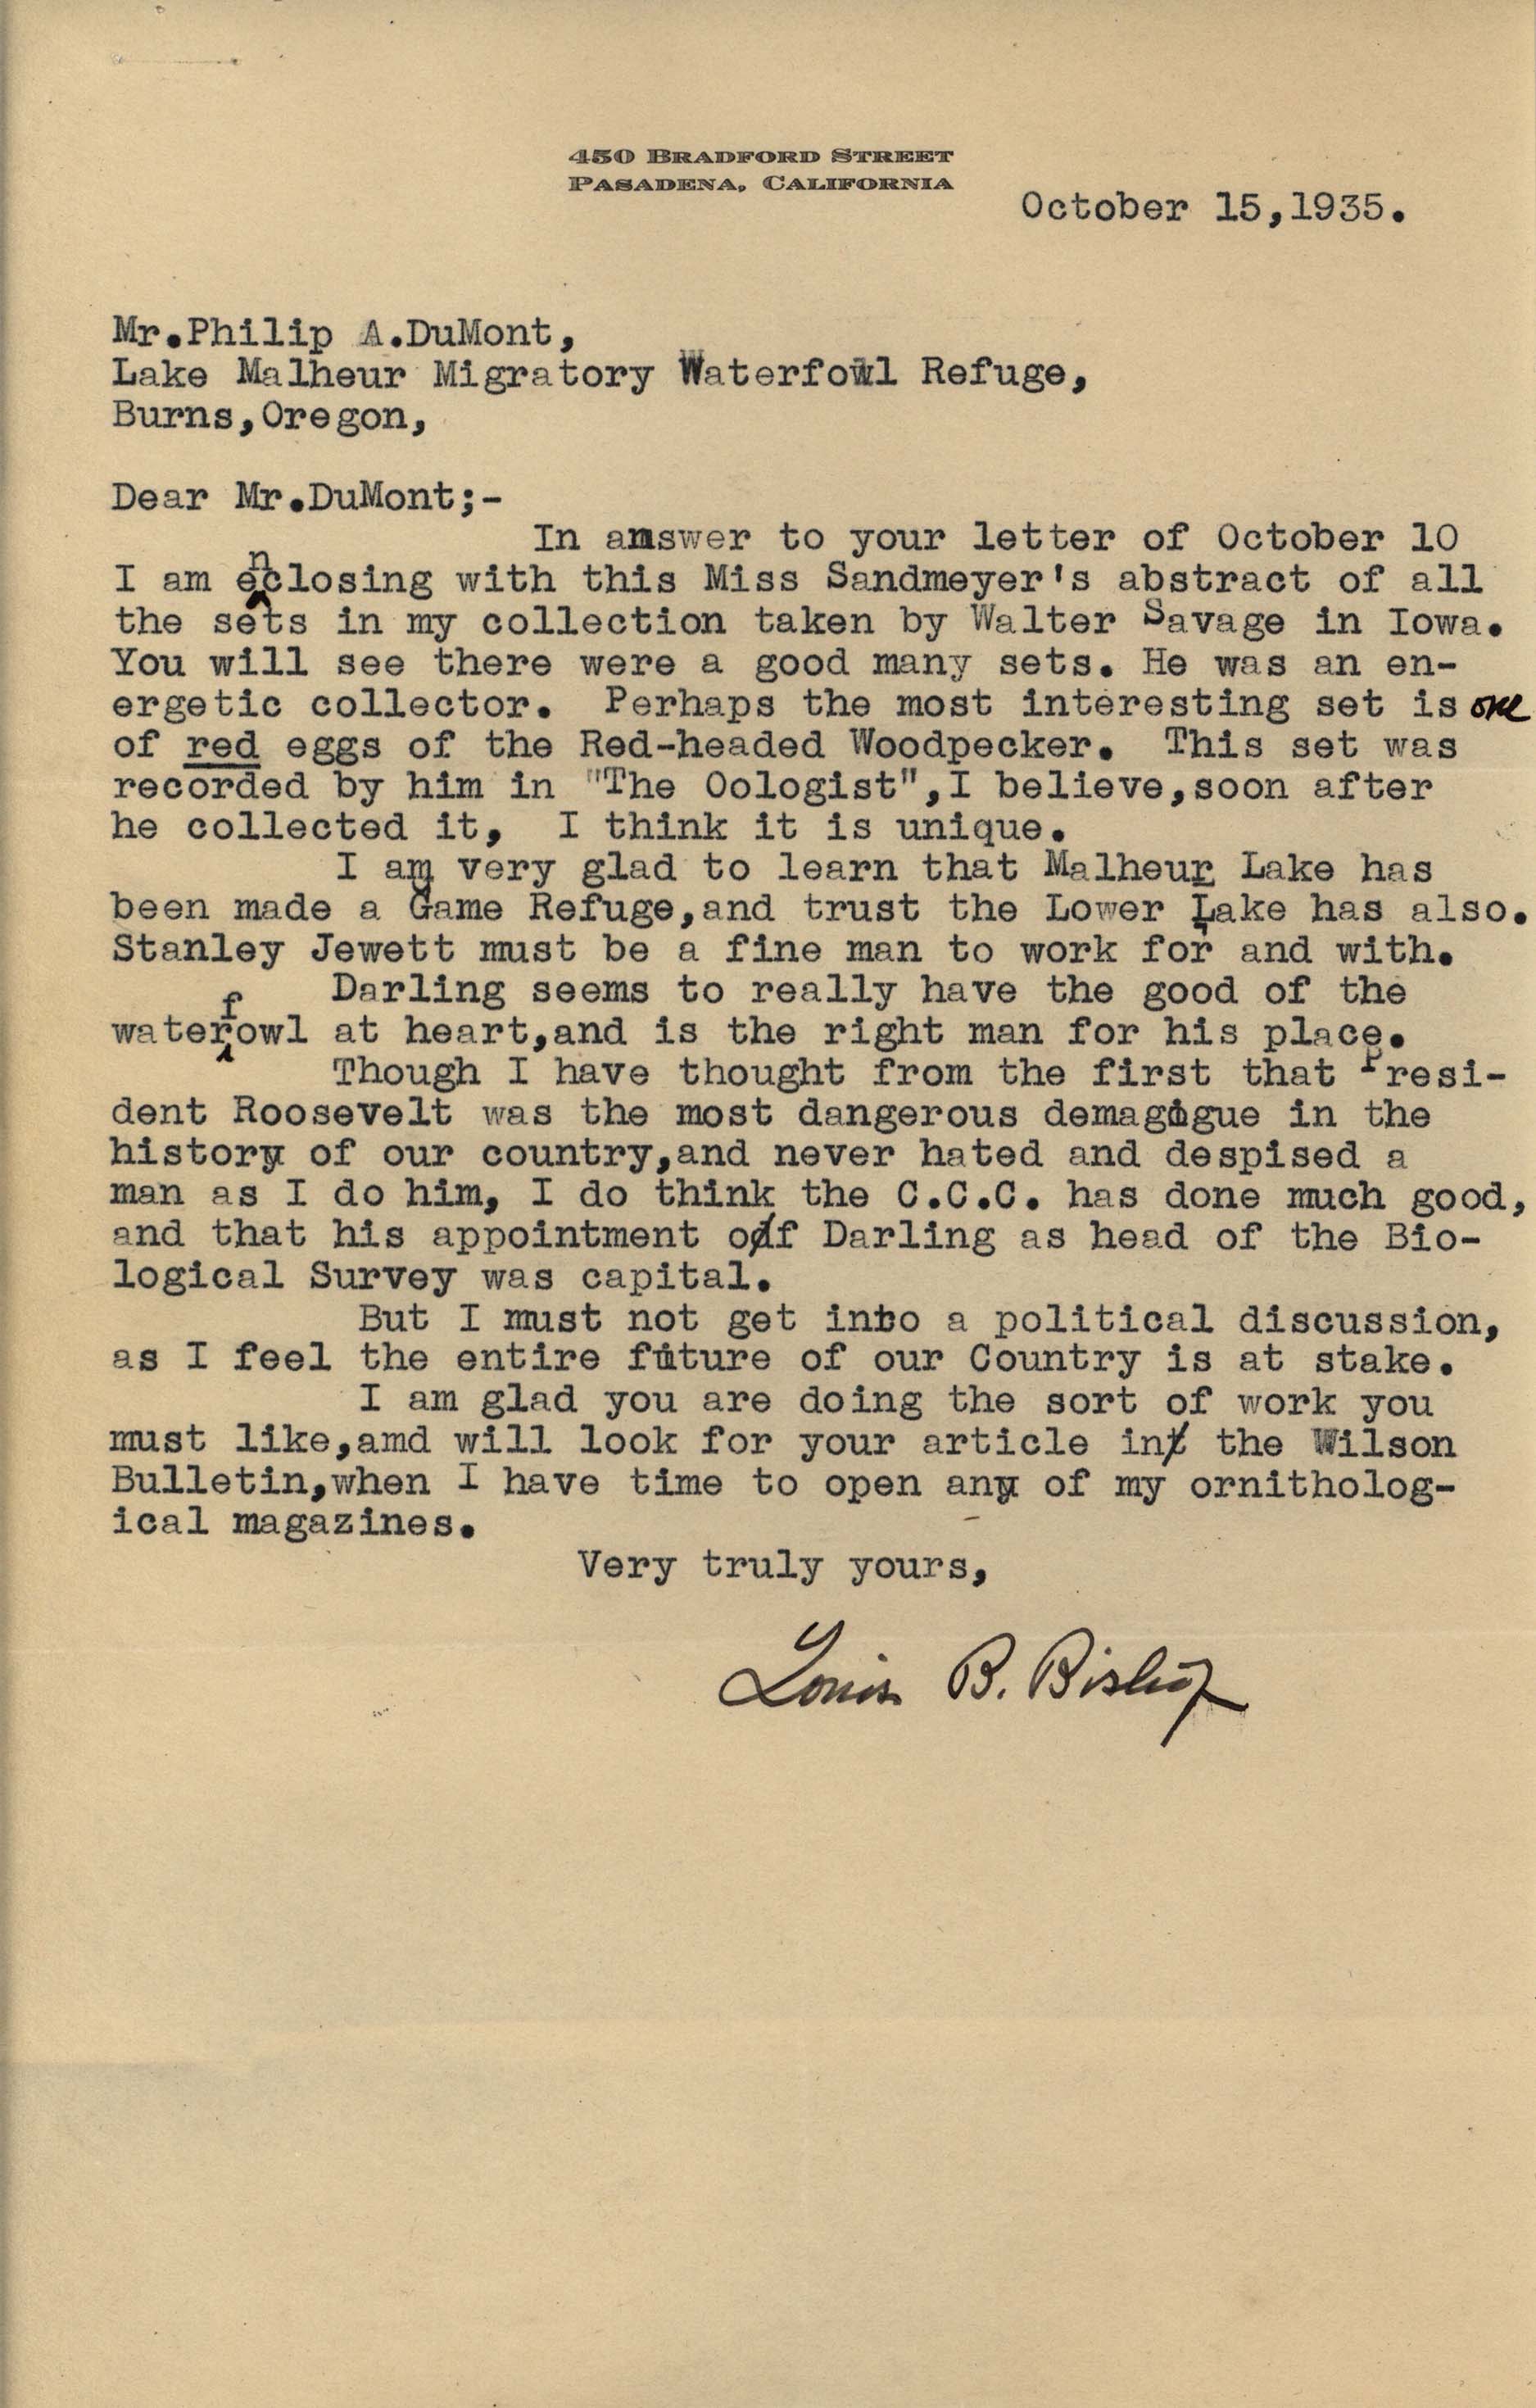 Louis Bishop letter to Philip DuMont regarding Walter Savage collection, October 15, 1935